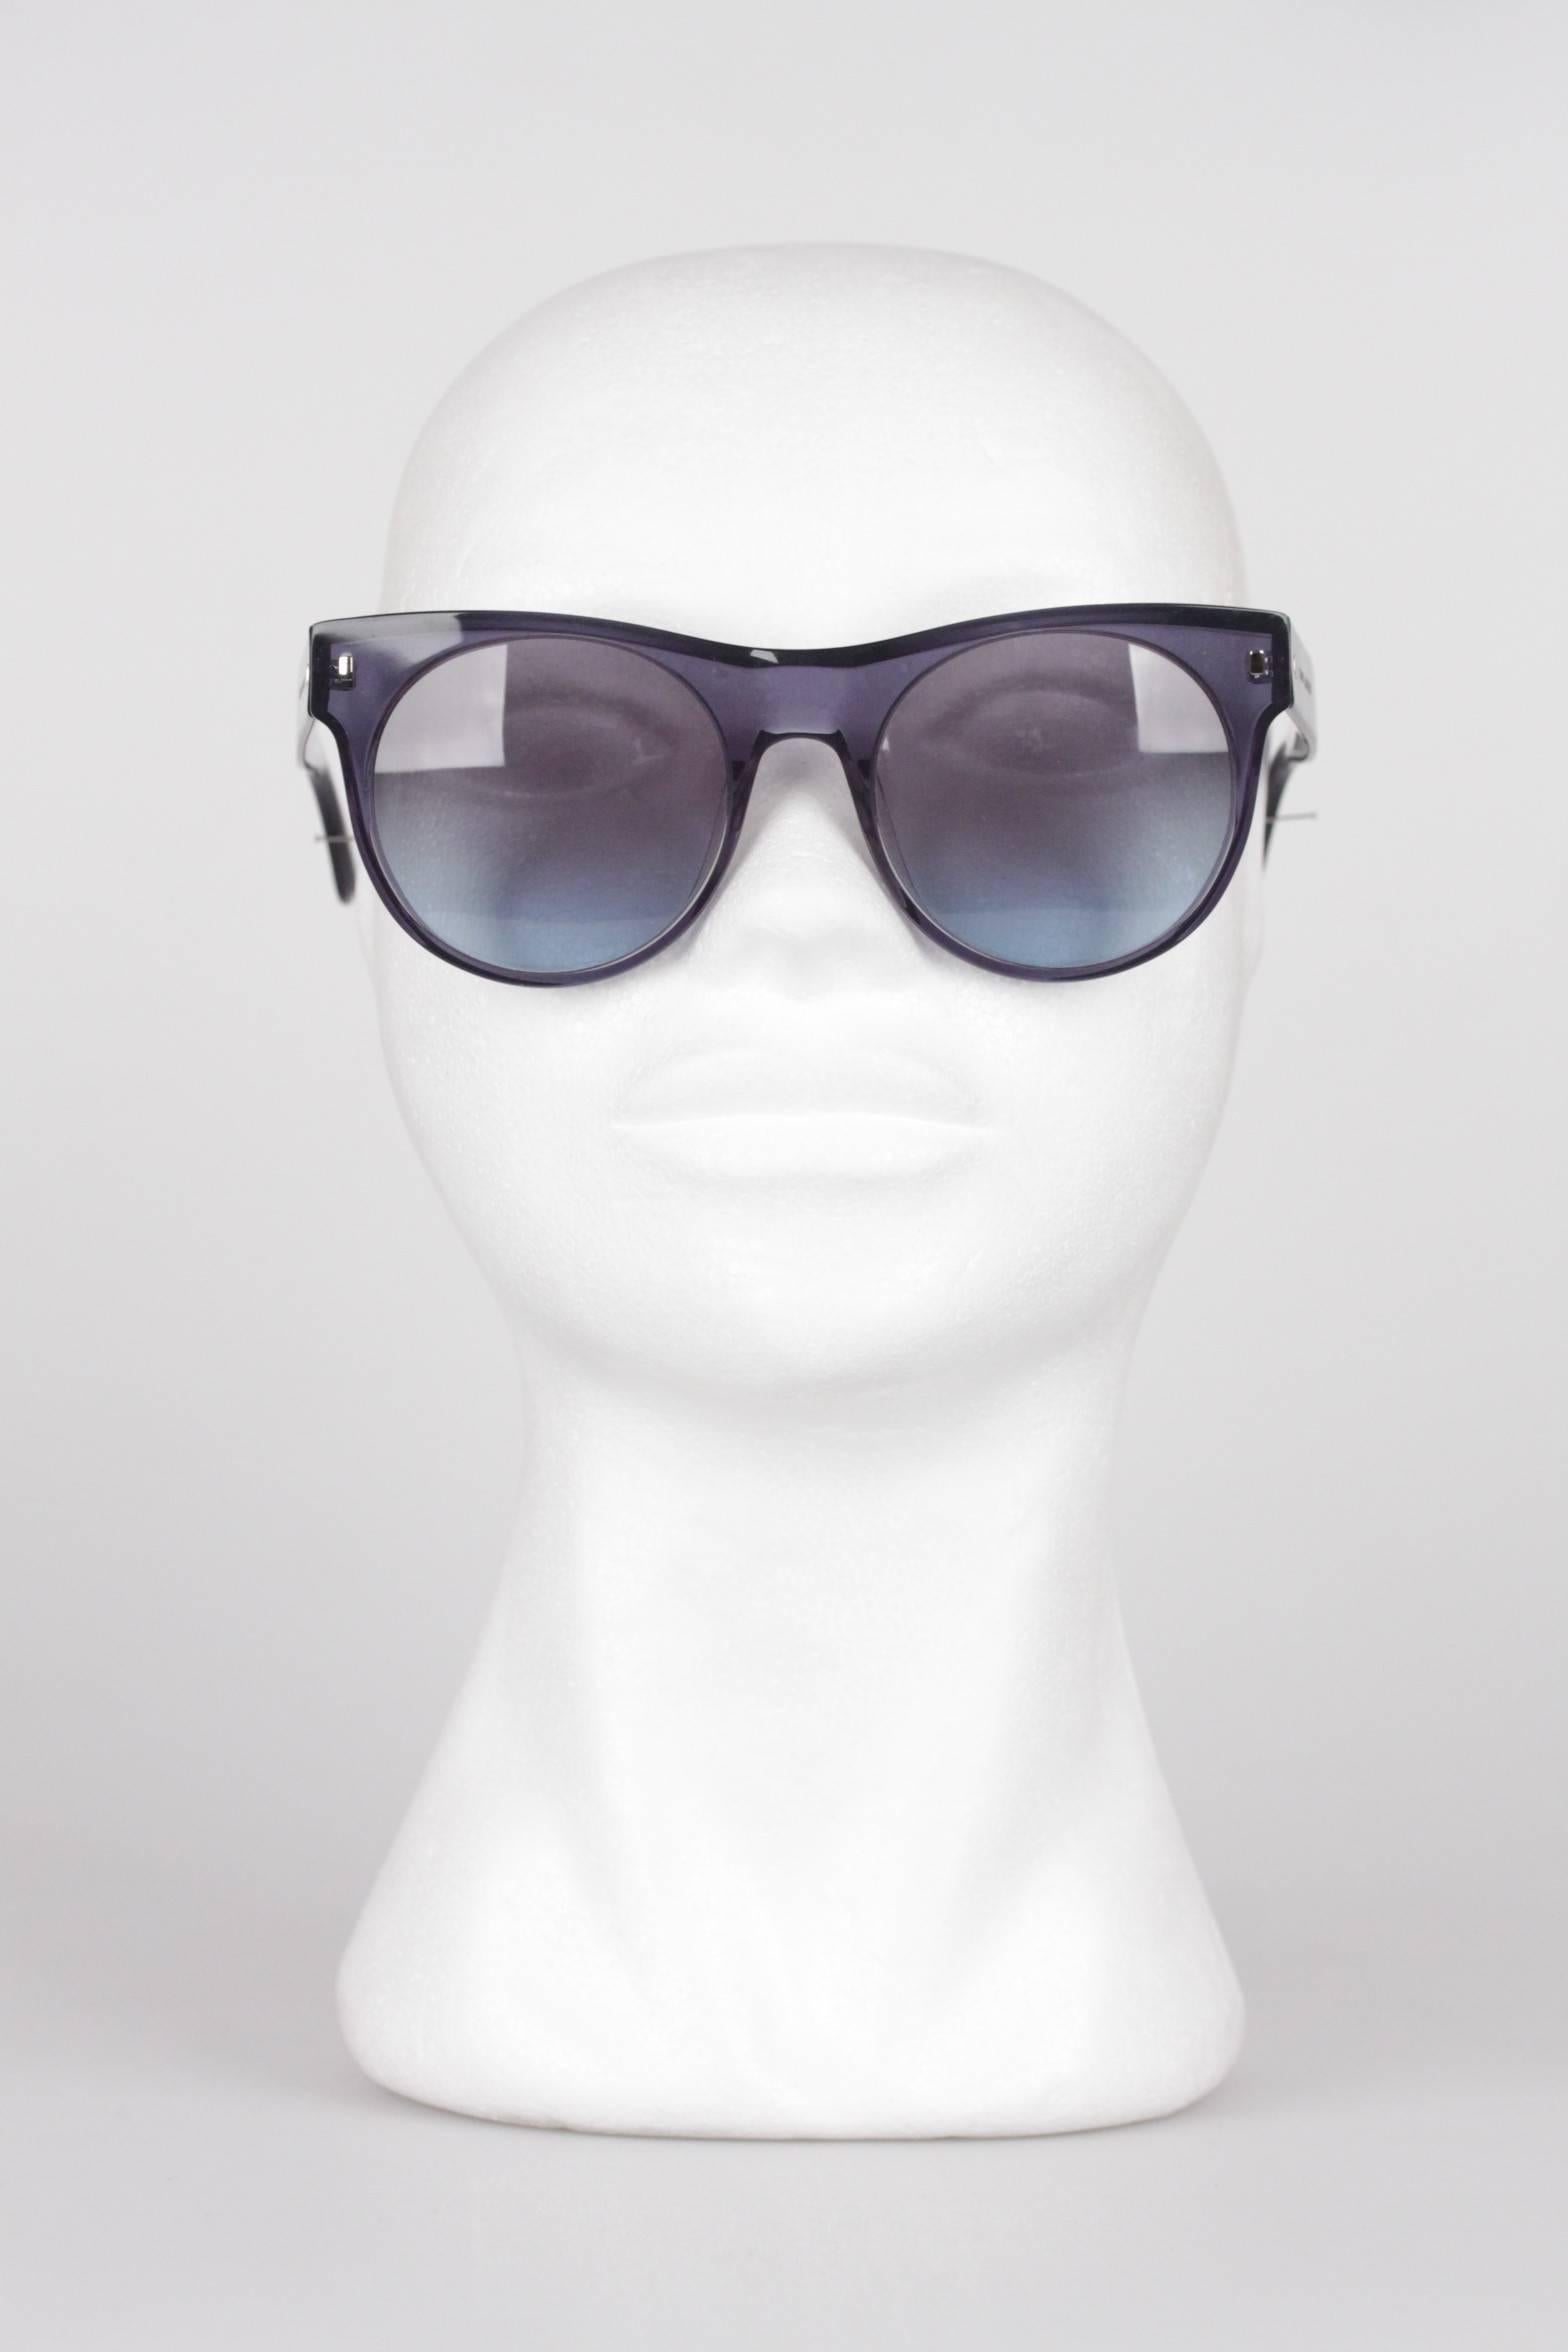 MINT, NEW & BOXED!

SAINT LAURENT Paris MINT & BOXED round sunglasses

In BLUE color, with BLUE gradient ORIGINAL lens

model refs: YSL 6360/N/BNPNM - 53/21 - 140

It will come with its original black smooth leather SAINT LAURENT